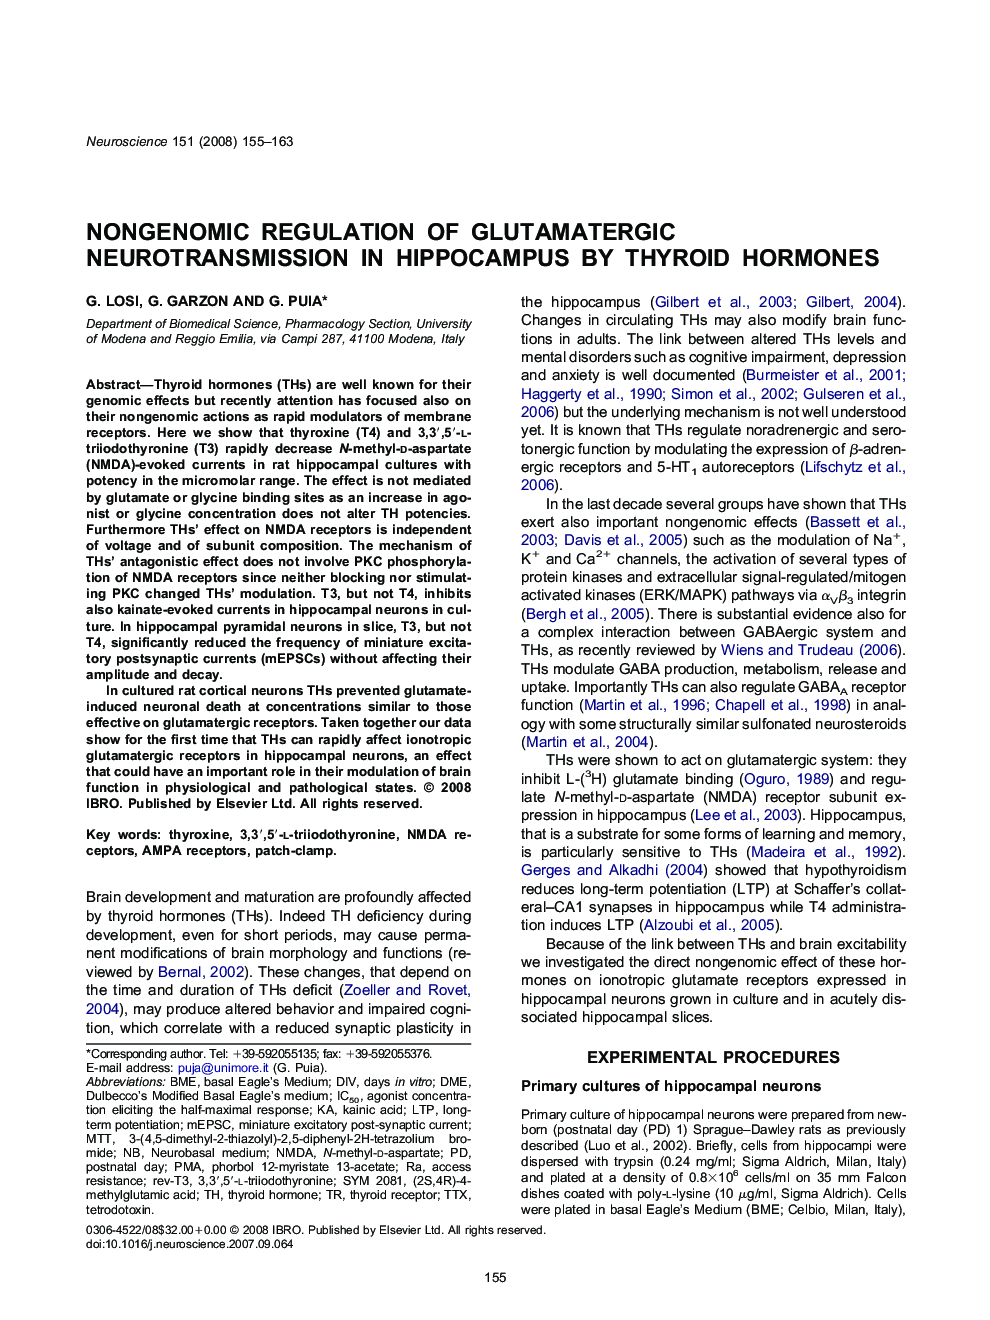 Nongenomic regulation of glutamatergic neurotransmission in hippocampus by thyroid hormones